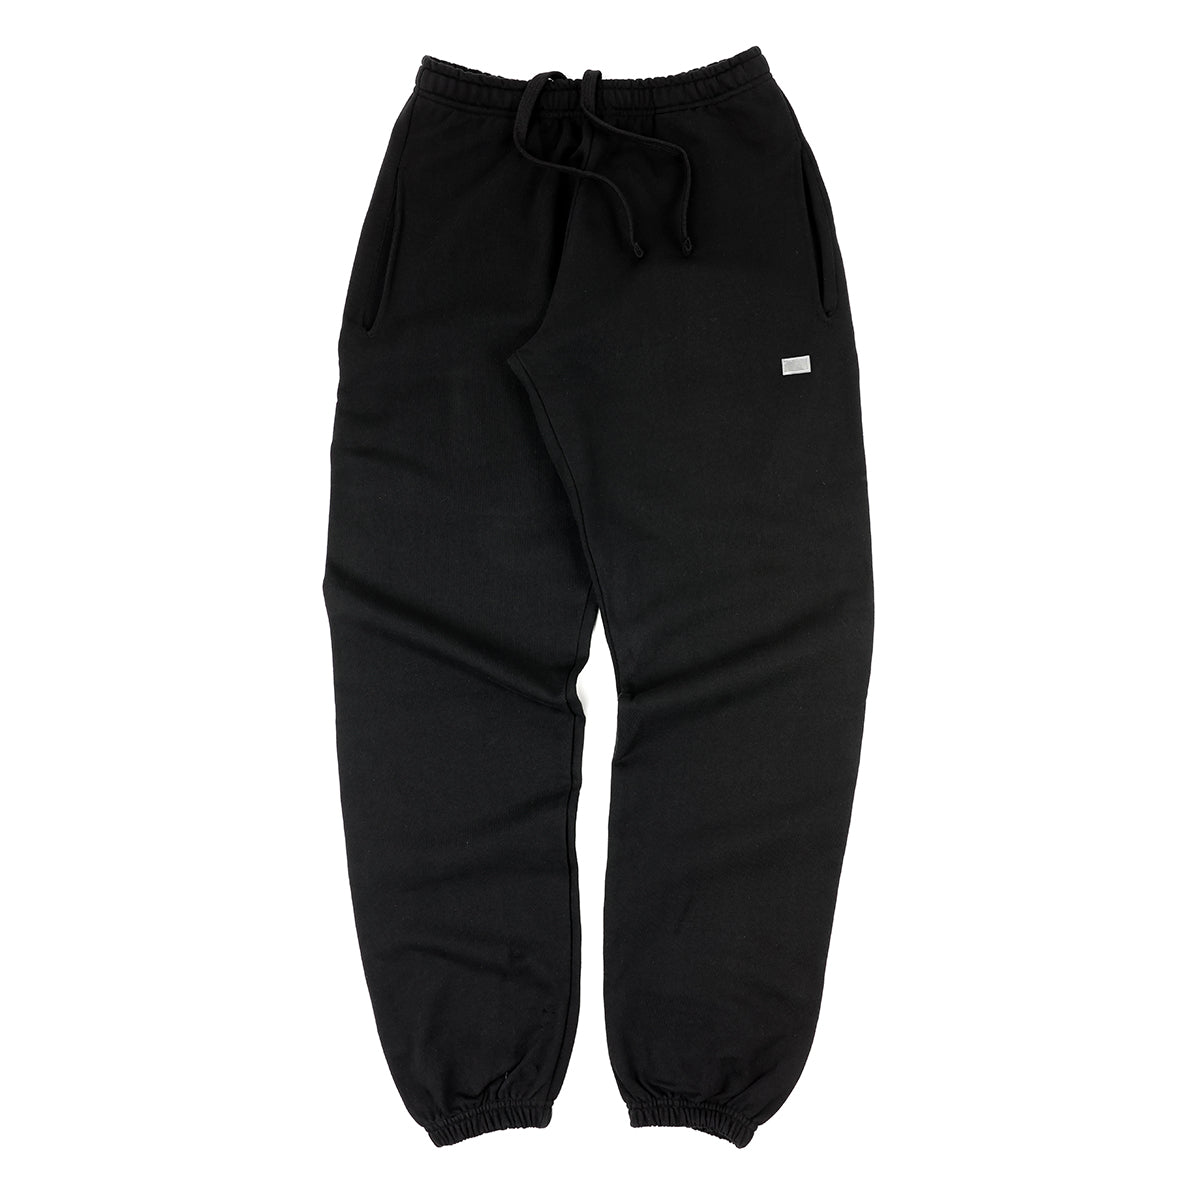 Crenshaw Pants - Black - Front